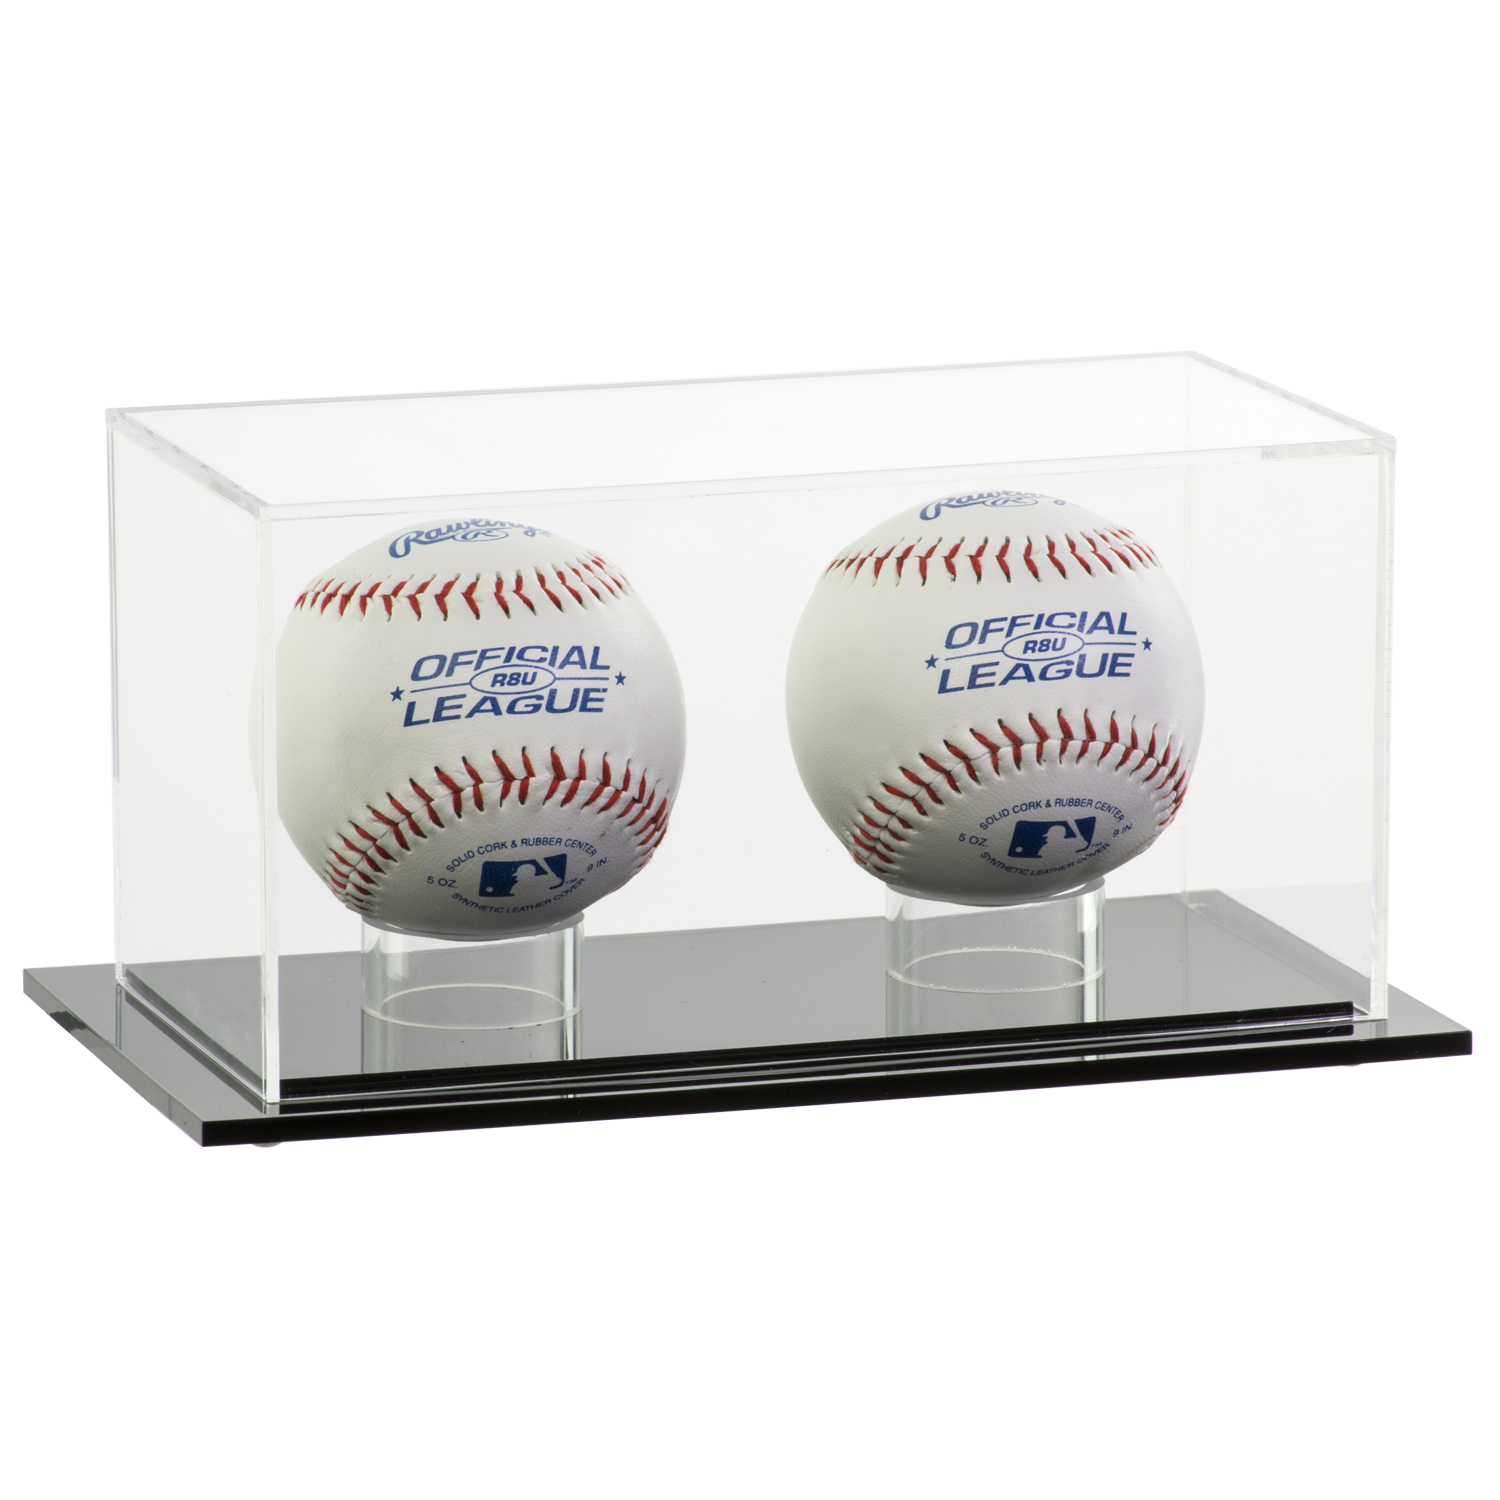 All Clear Acrylic Jersey Display Case Football Baseball 